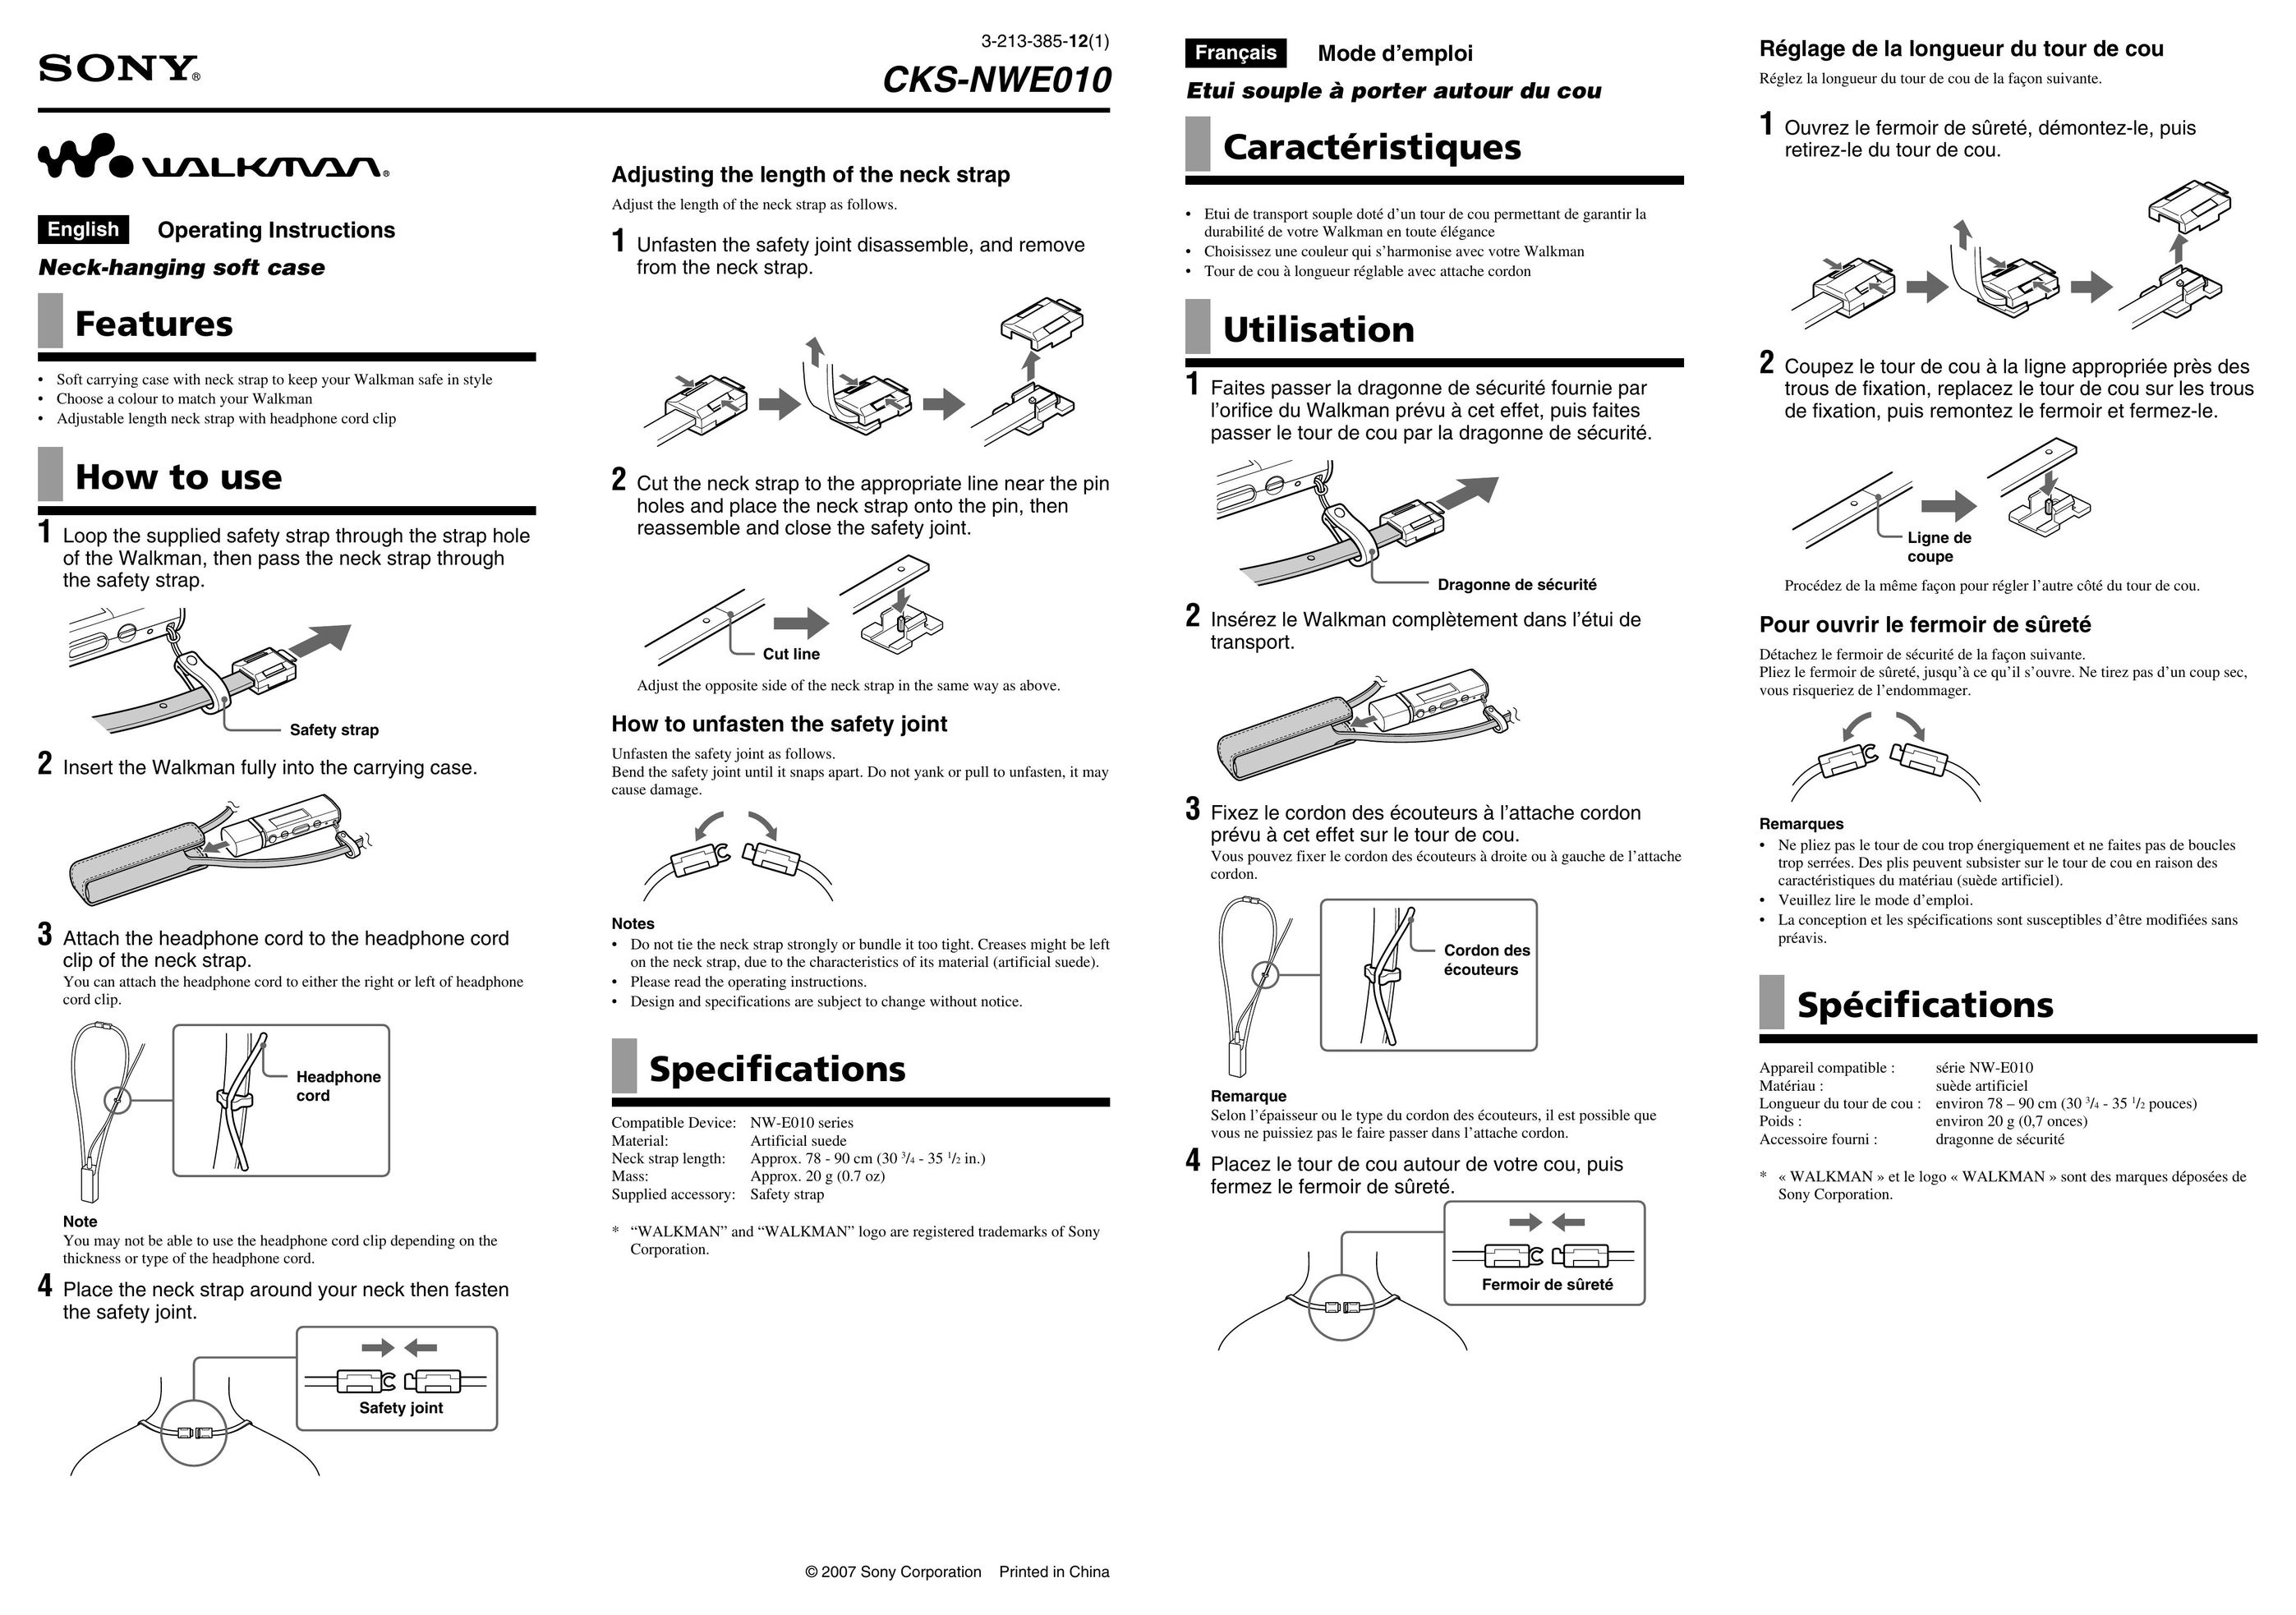 Sony CKS-NWE010 Carrying Case User Manual